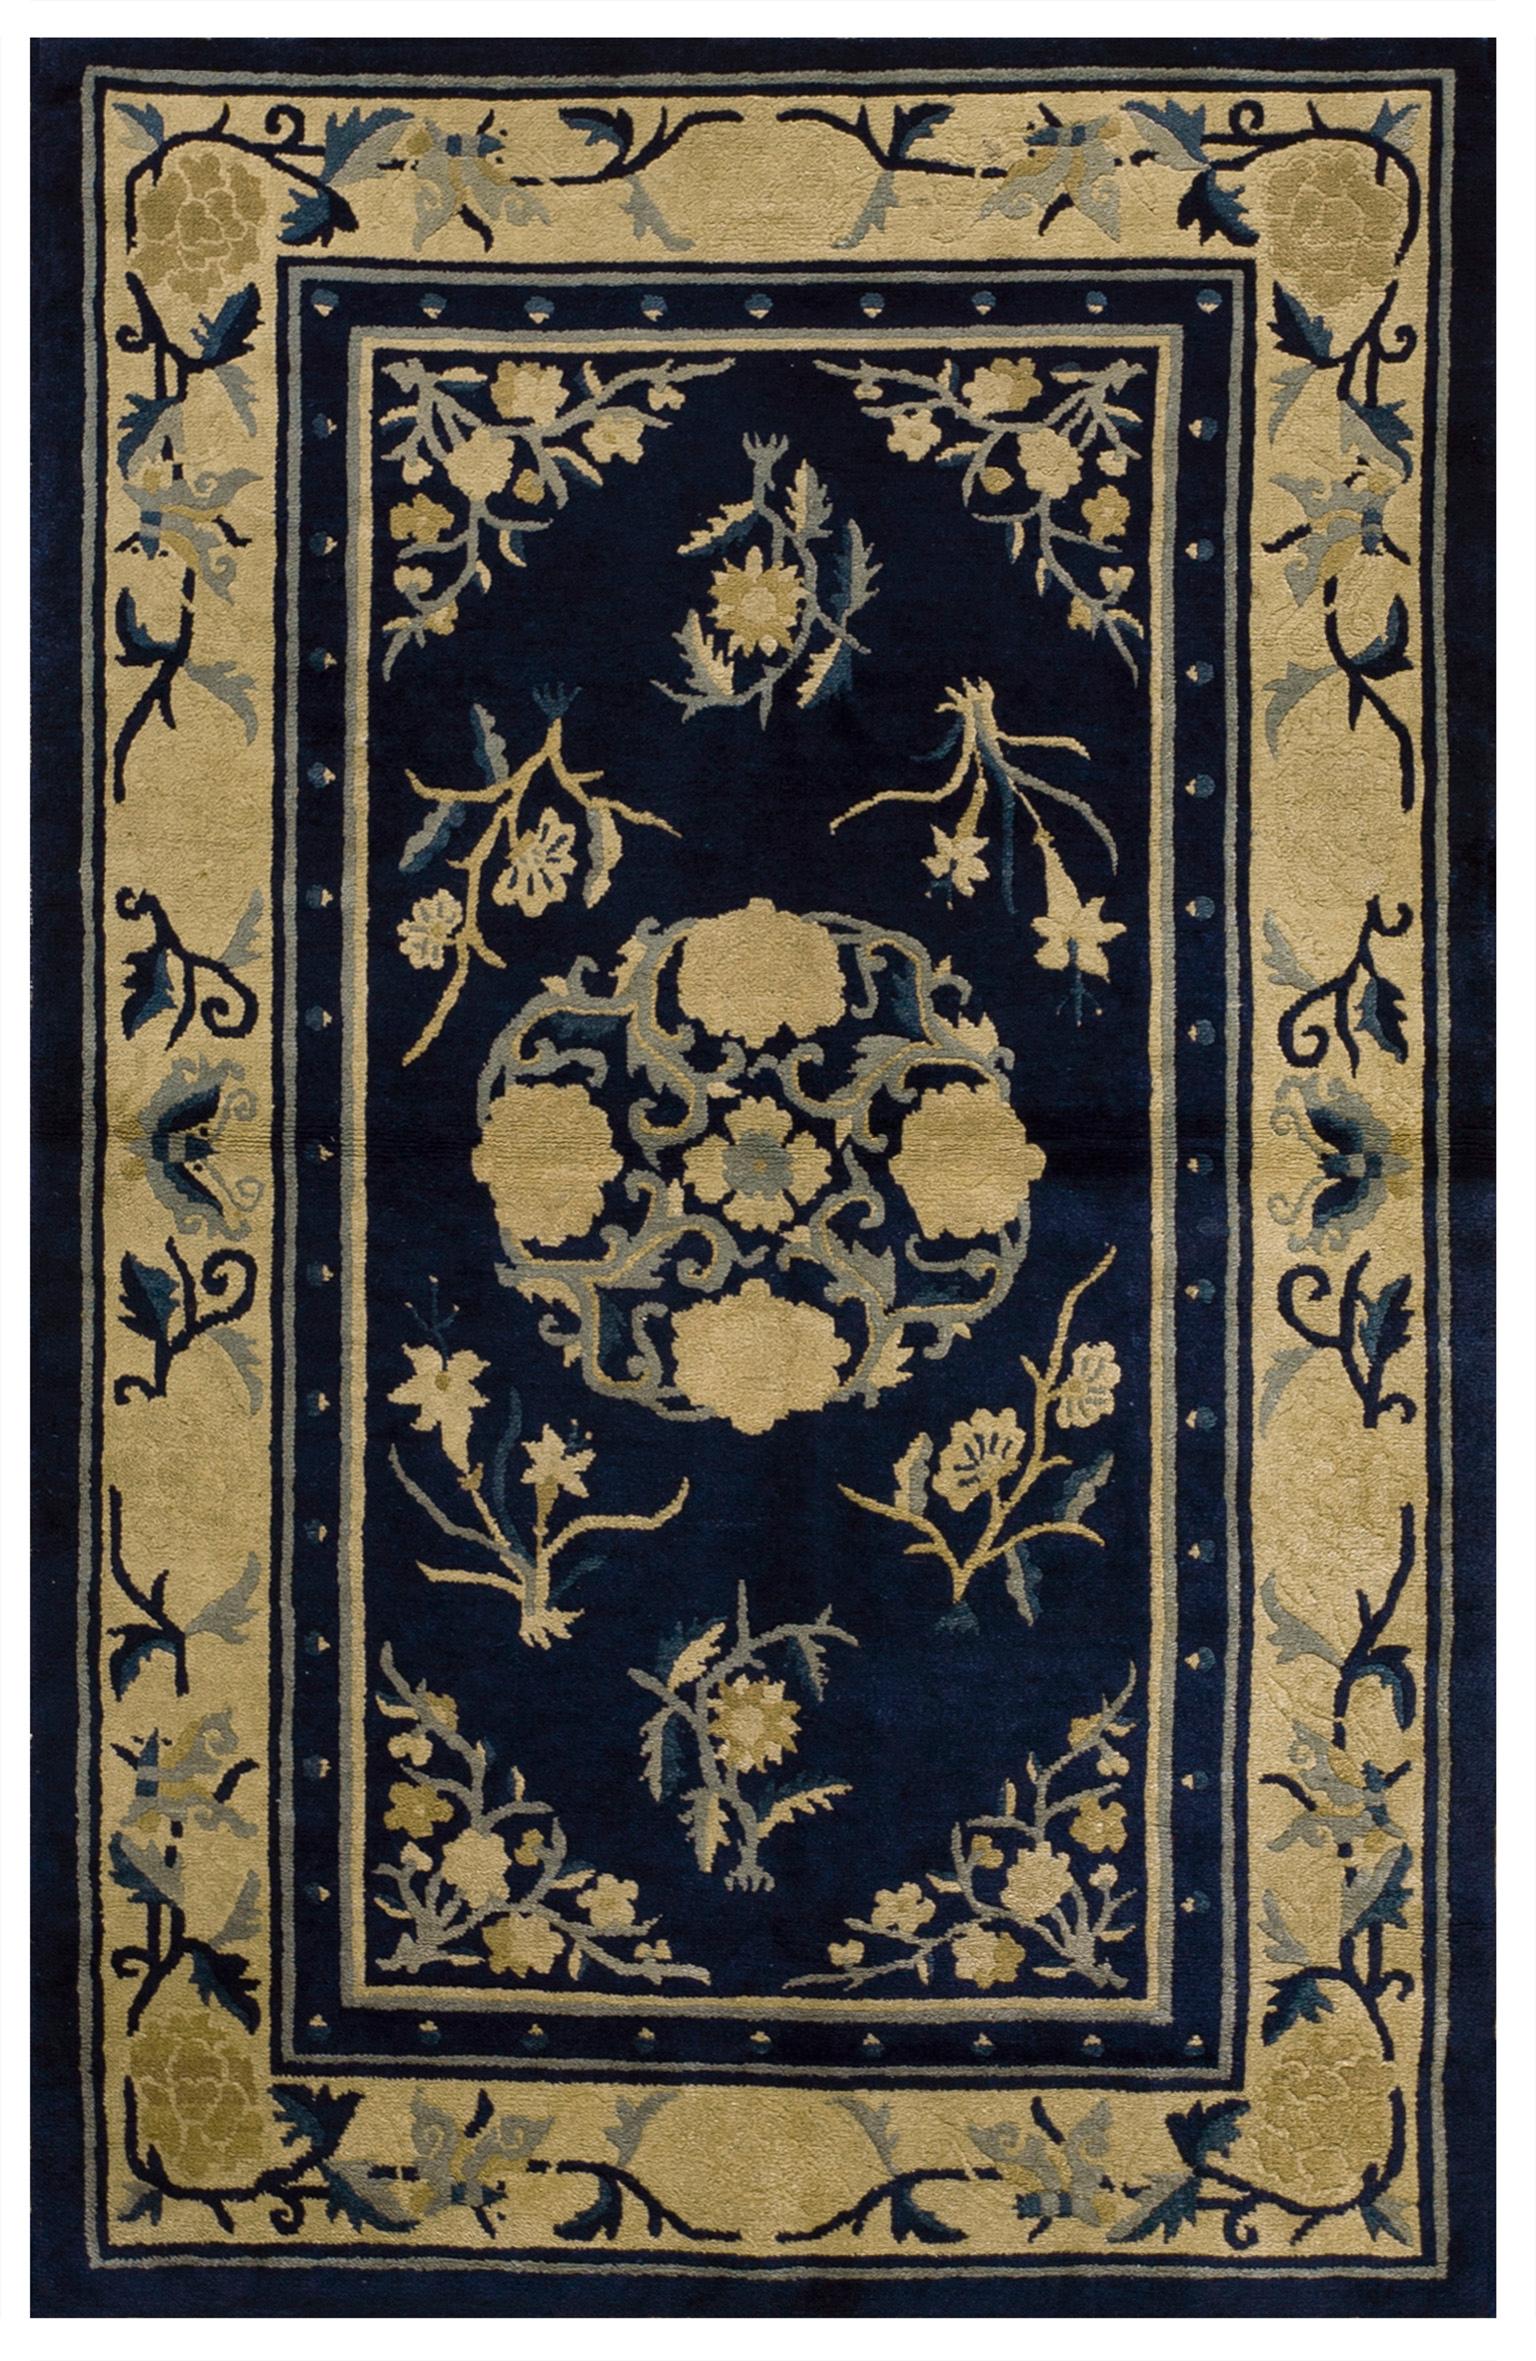 Antique Chinese Peking rug. Measures: 3' 0''x 4' 10''.